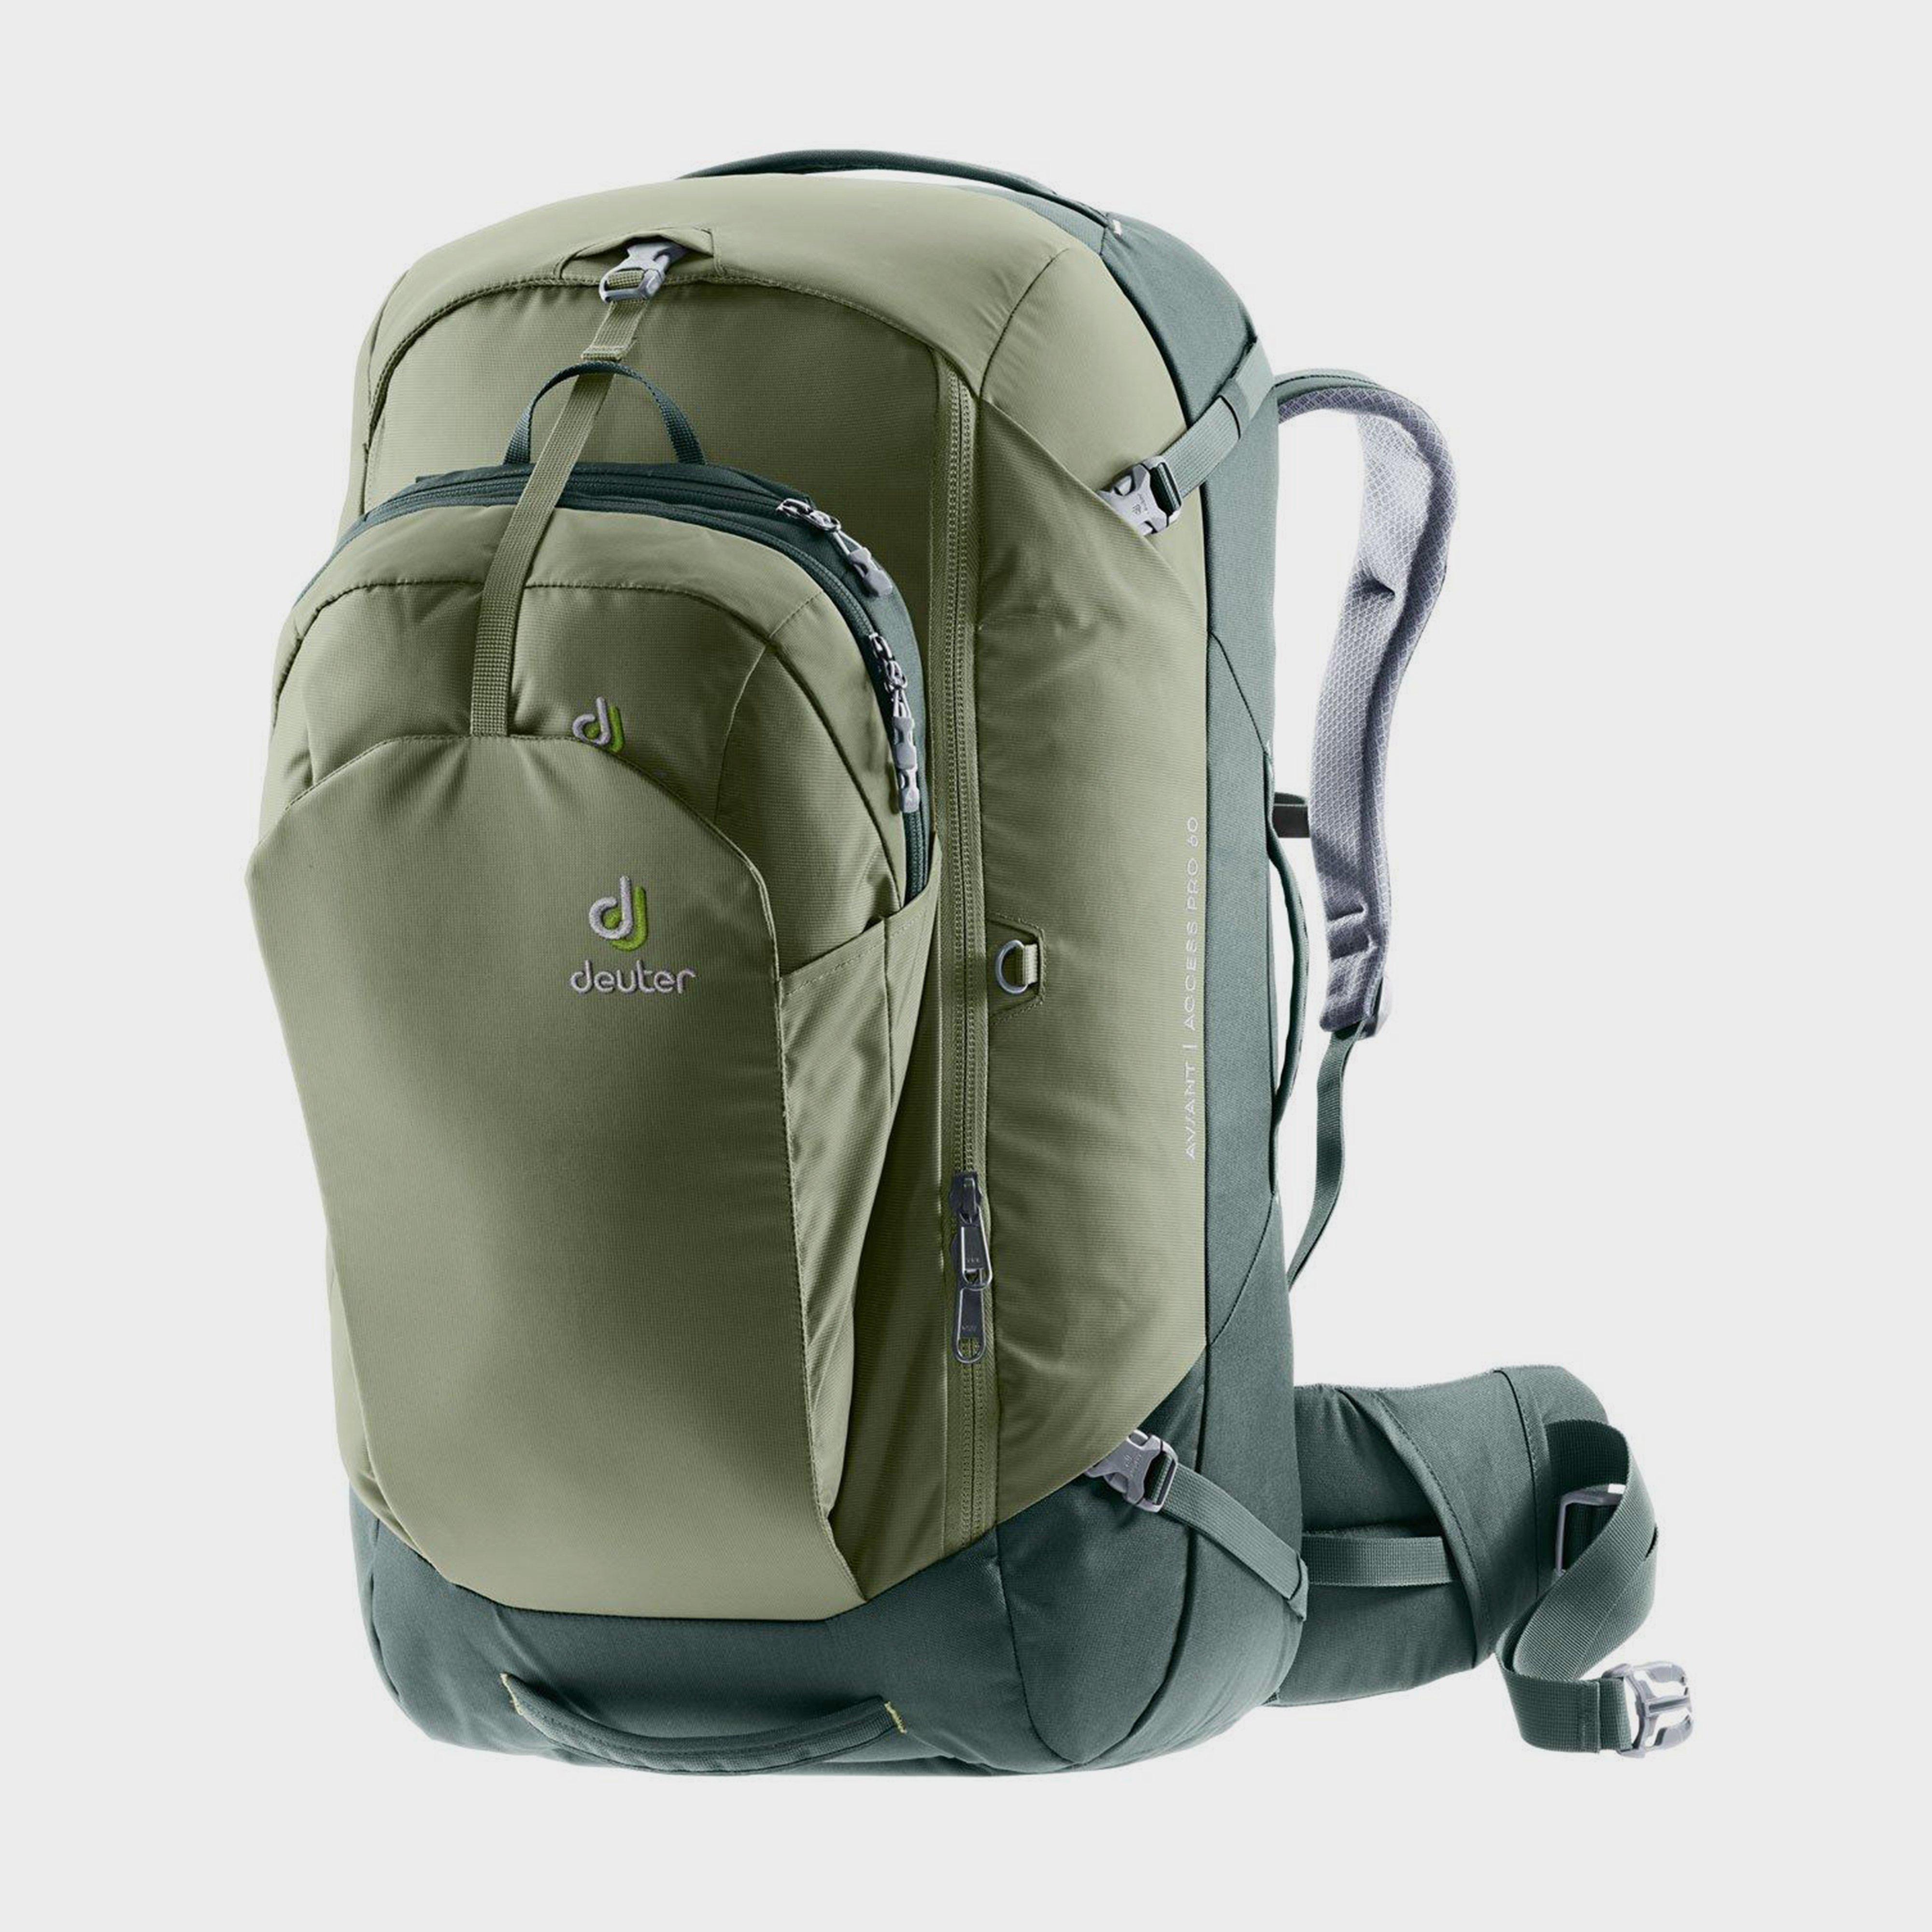 Deuter Aviant Pro 60 Travel Backpack - Green/green  Green/green